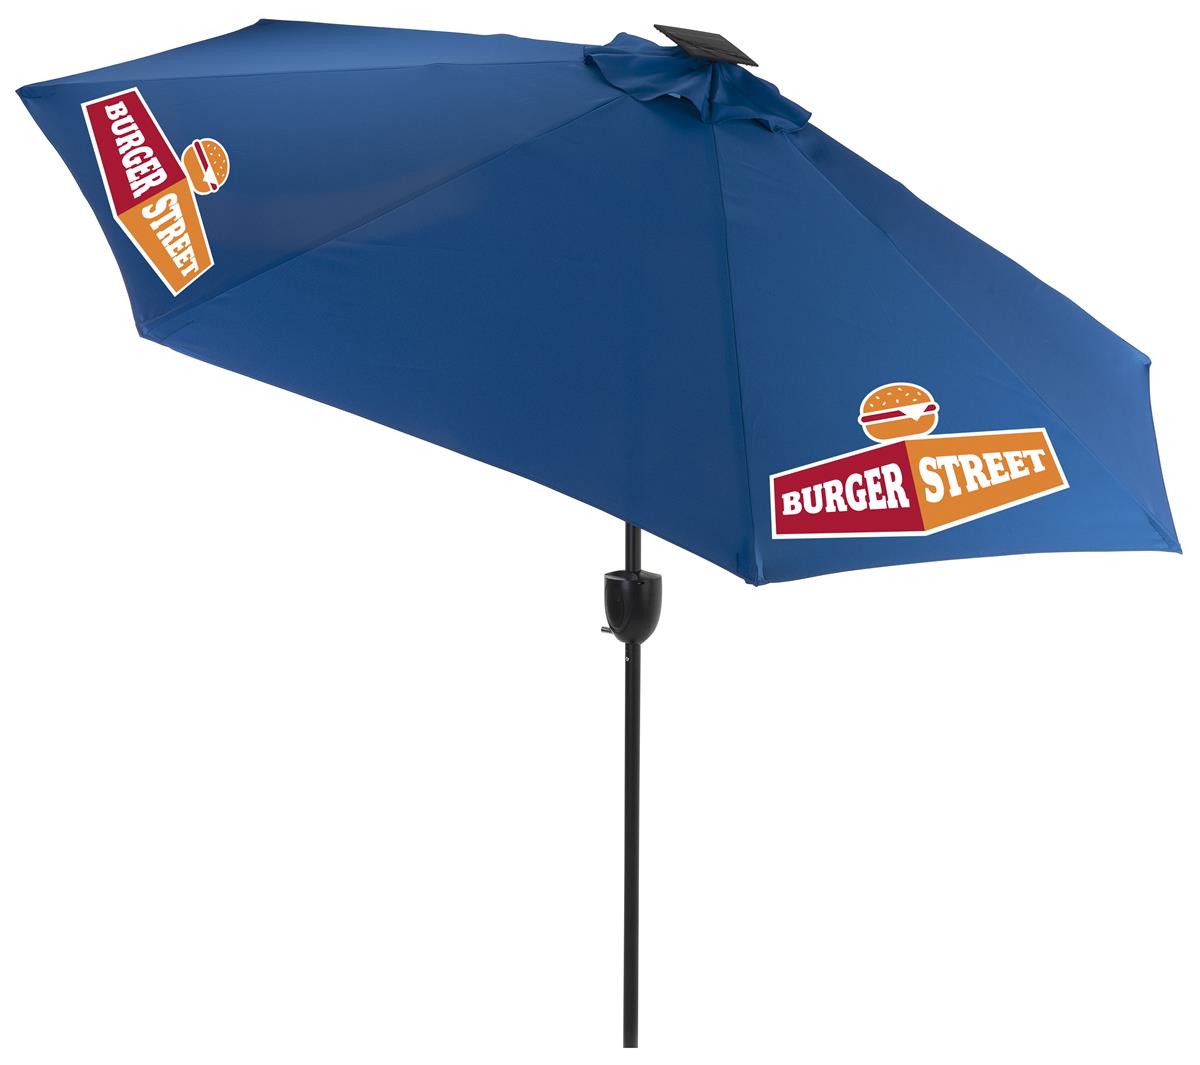 Solar Patio Umbrella With Bluetooth, Outdoor Umbrella With Lights And Speaker